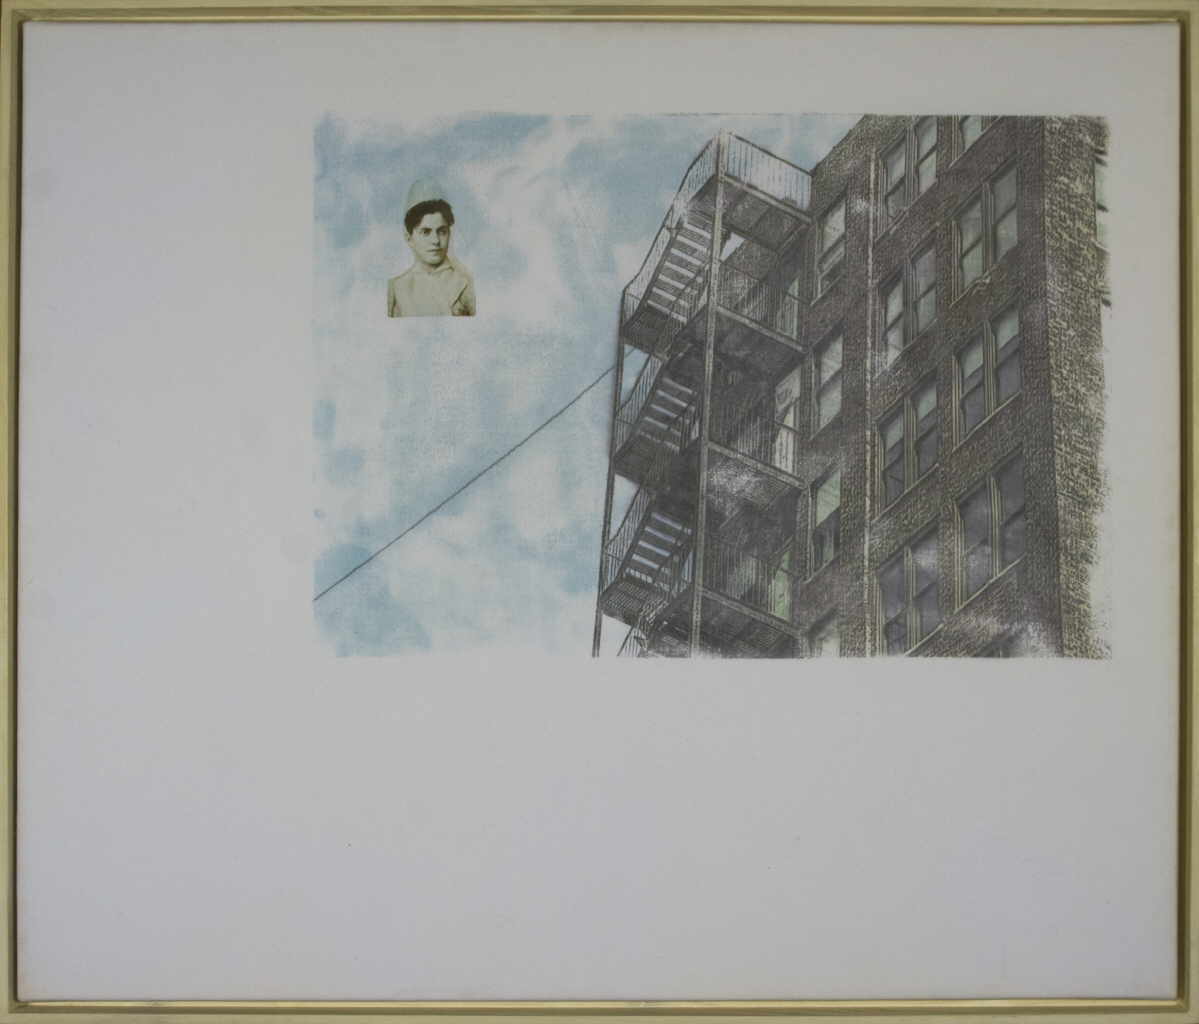 Zauner Christa 
"Escalator", 2004
Frottage / Tela
50 x 60 cm